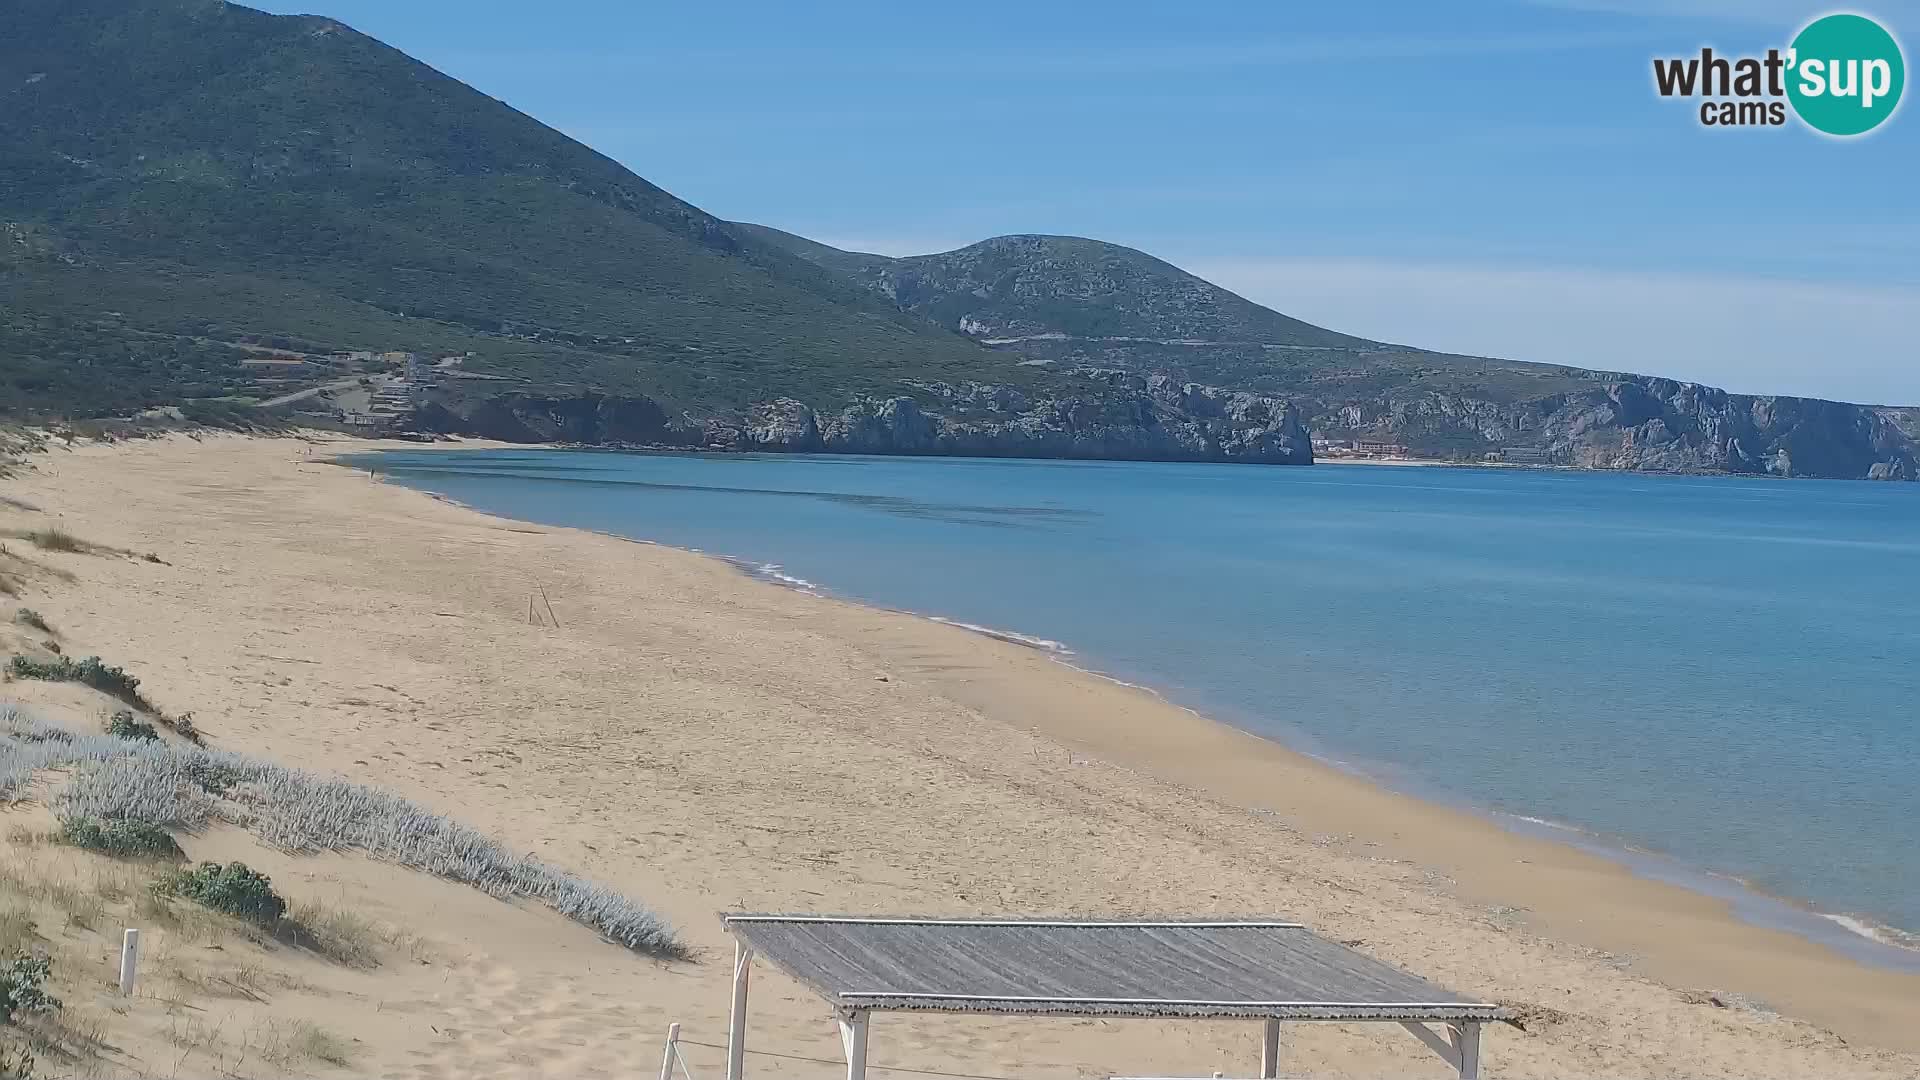 Spiaggia di San Nicolò webcam a Buggerru, Sardegna – Ammira le onde e i tramonti